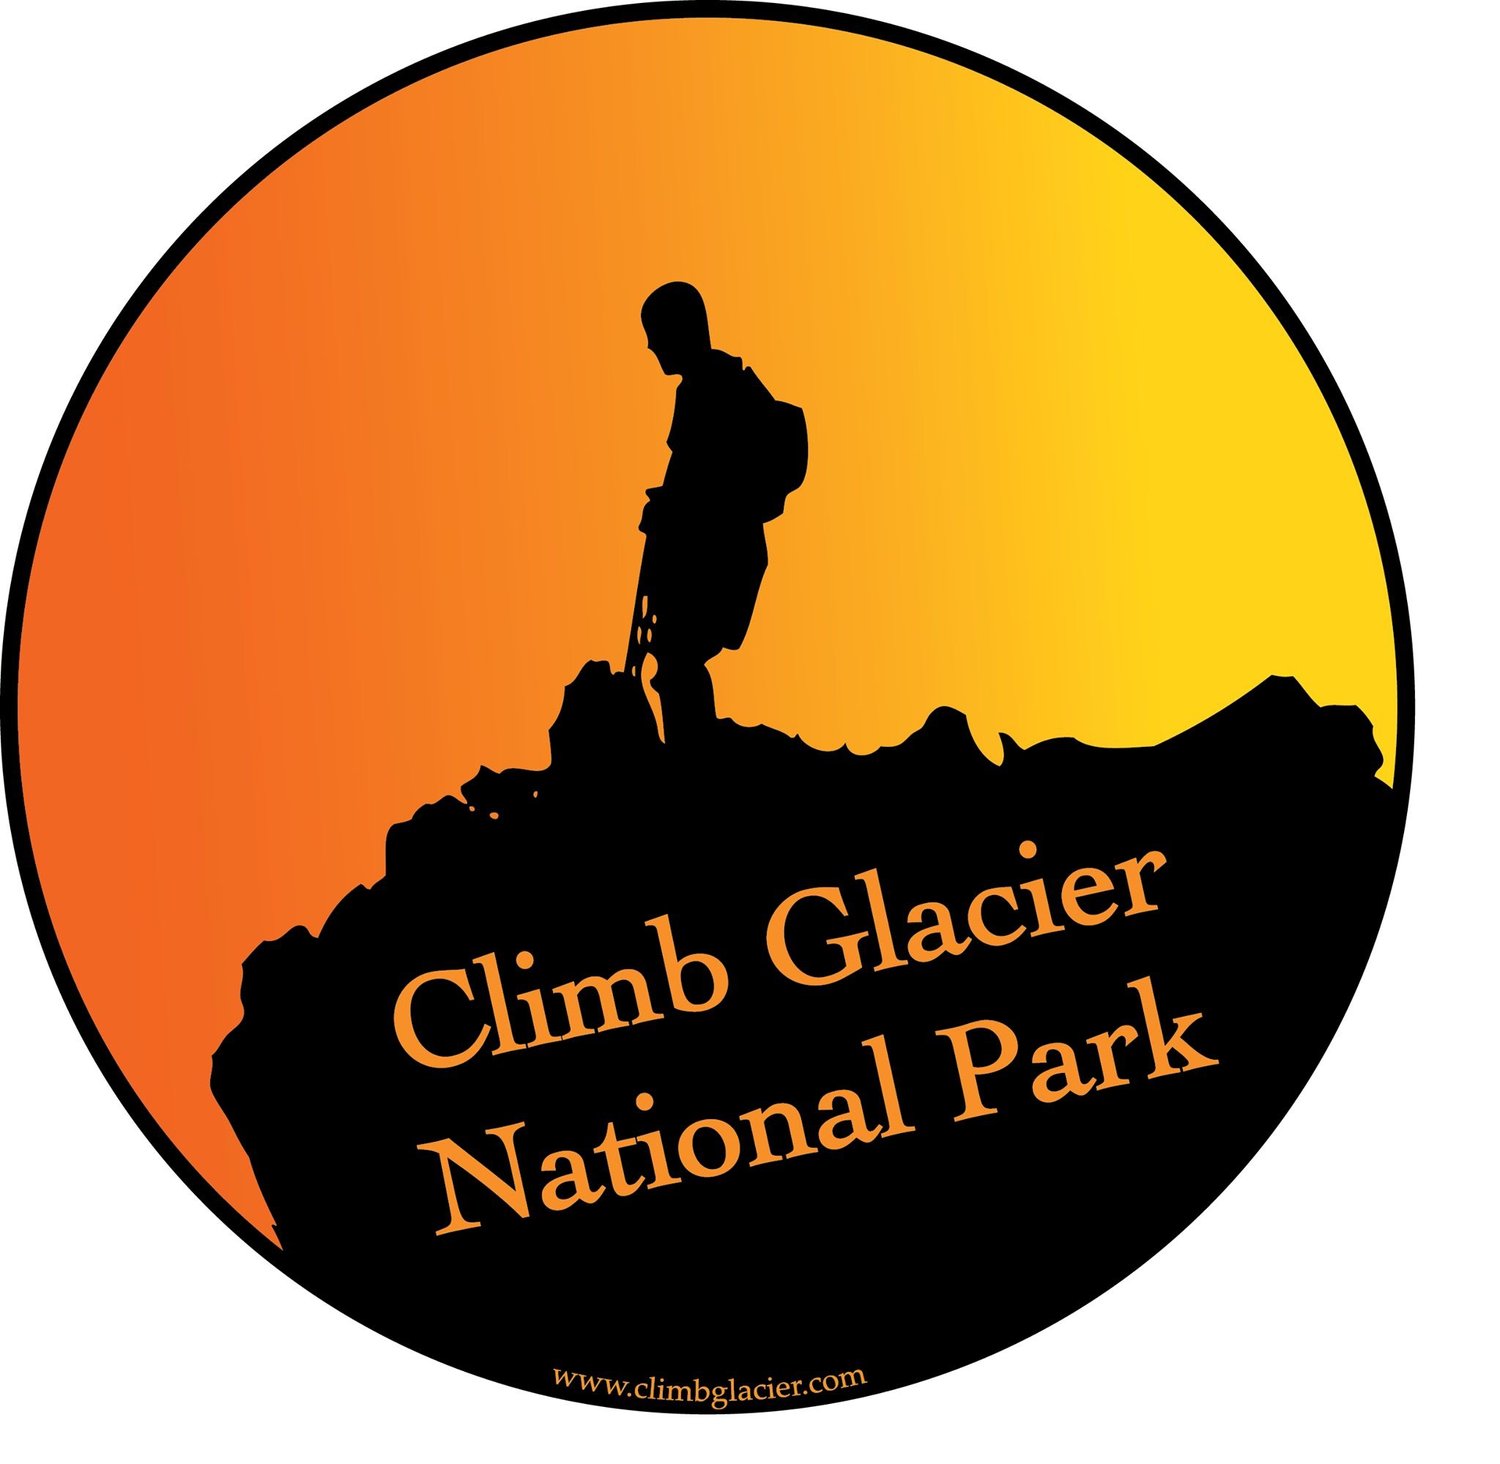 Climb Glacier National Park